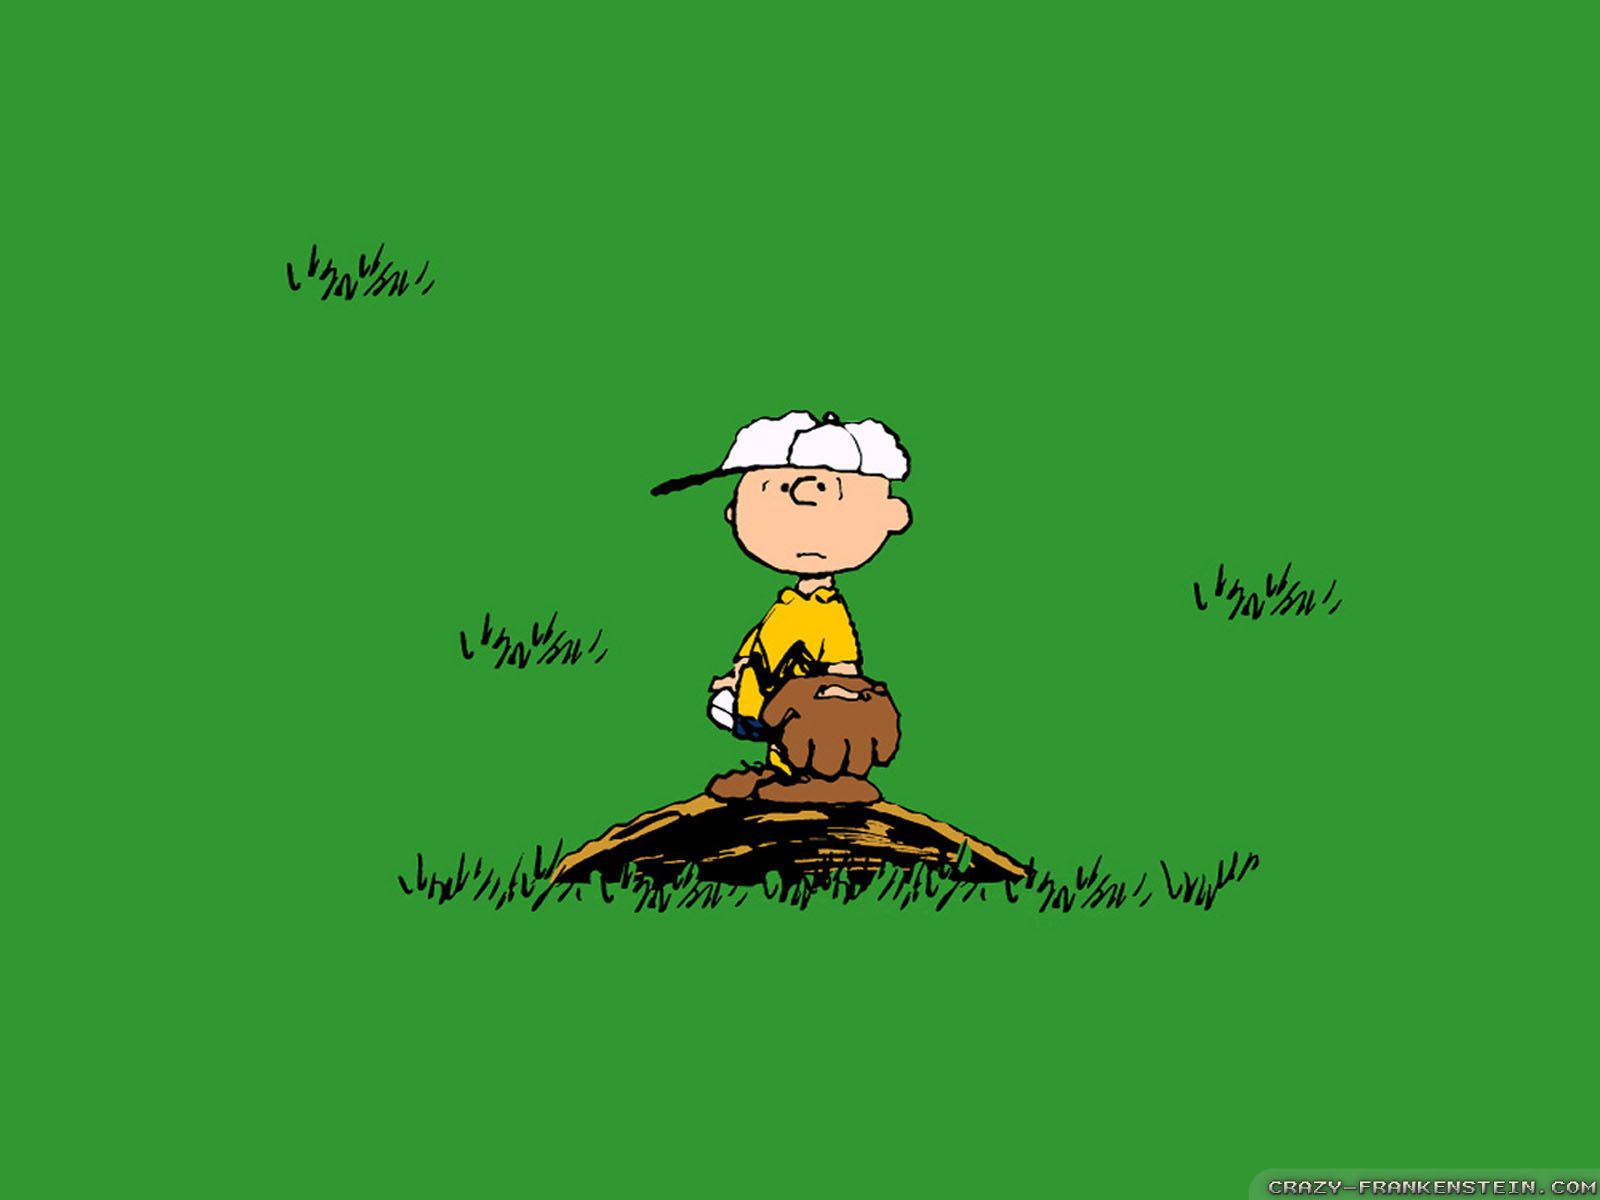 Charlie brown wallpaper for your desktop - Charlie Brown